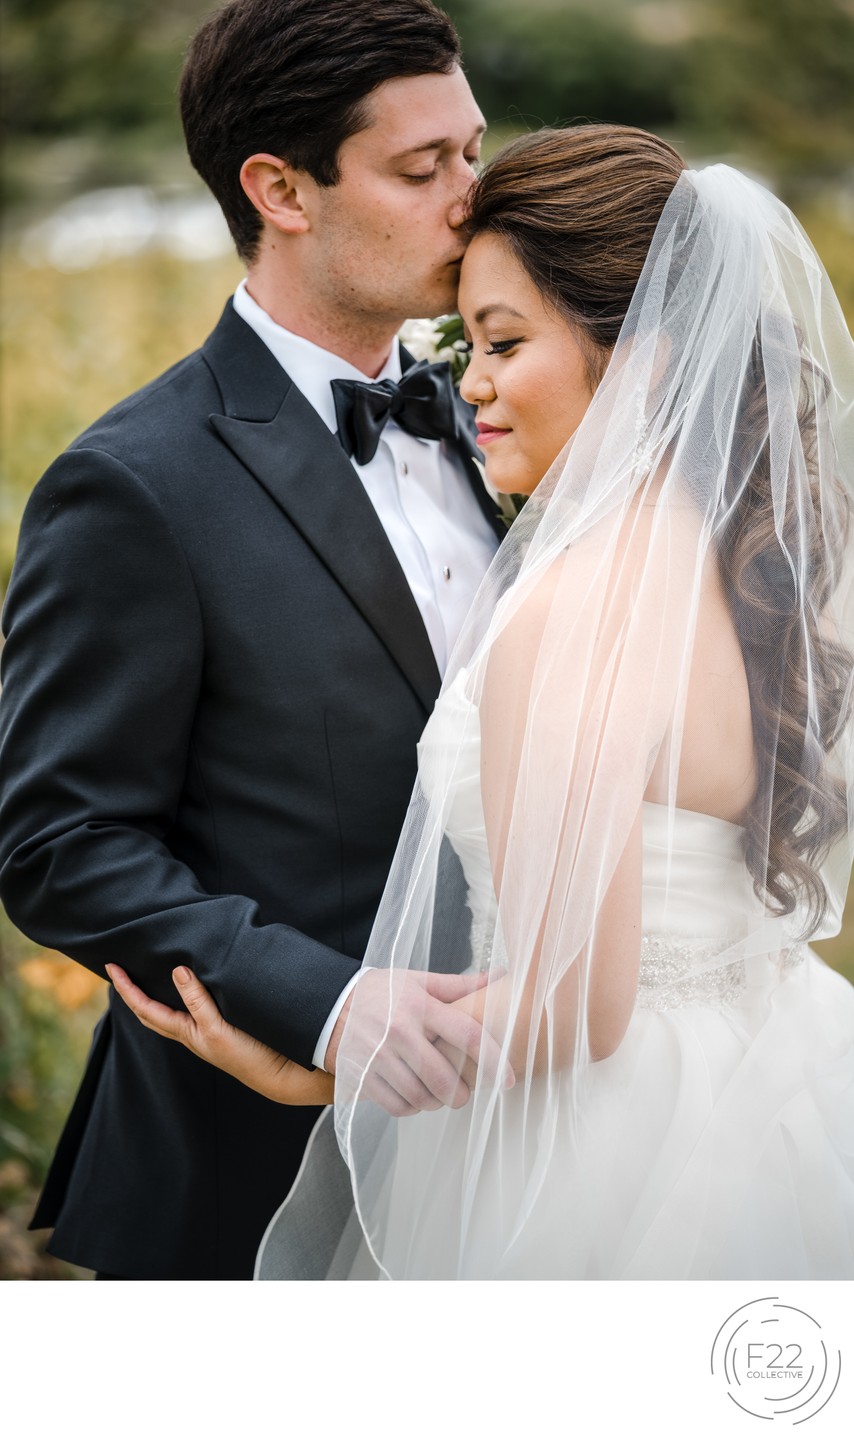 Best Wedding Photography Sacramento Bride Groom Embrace